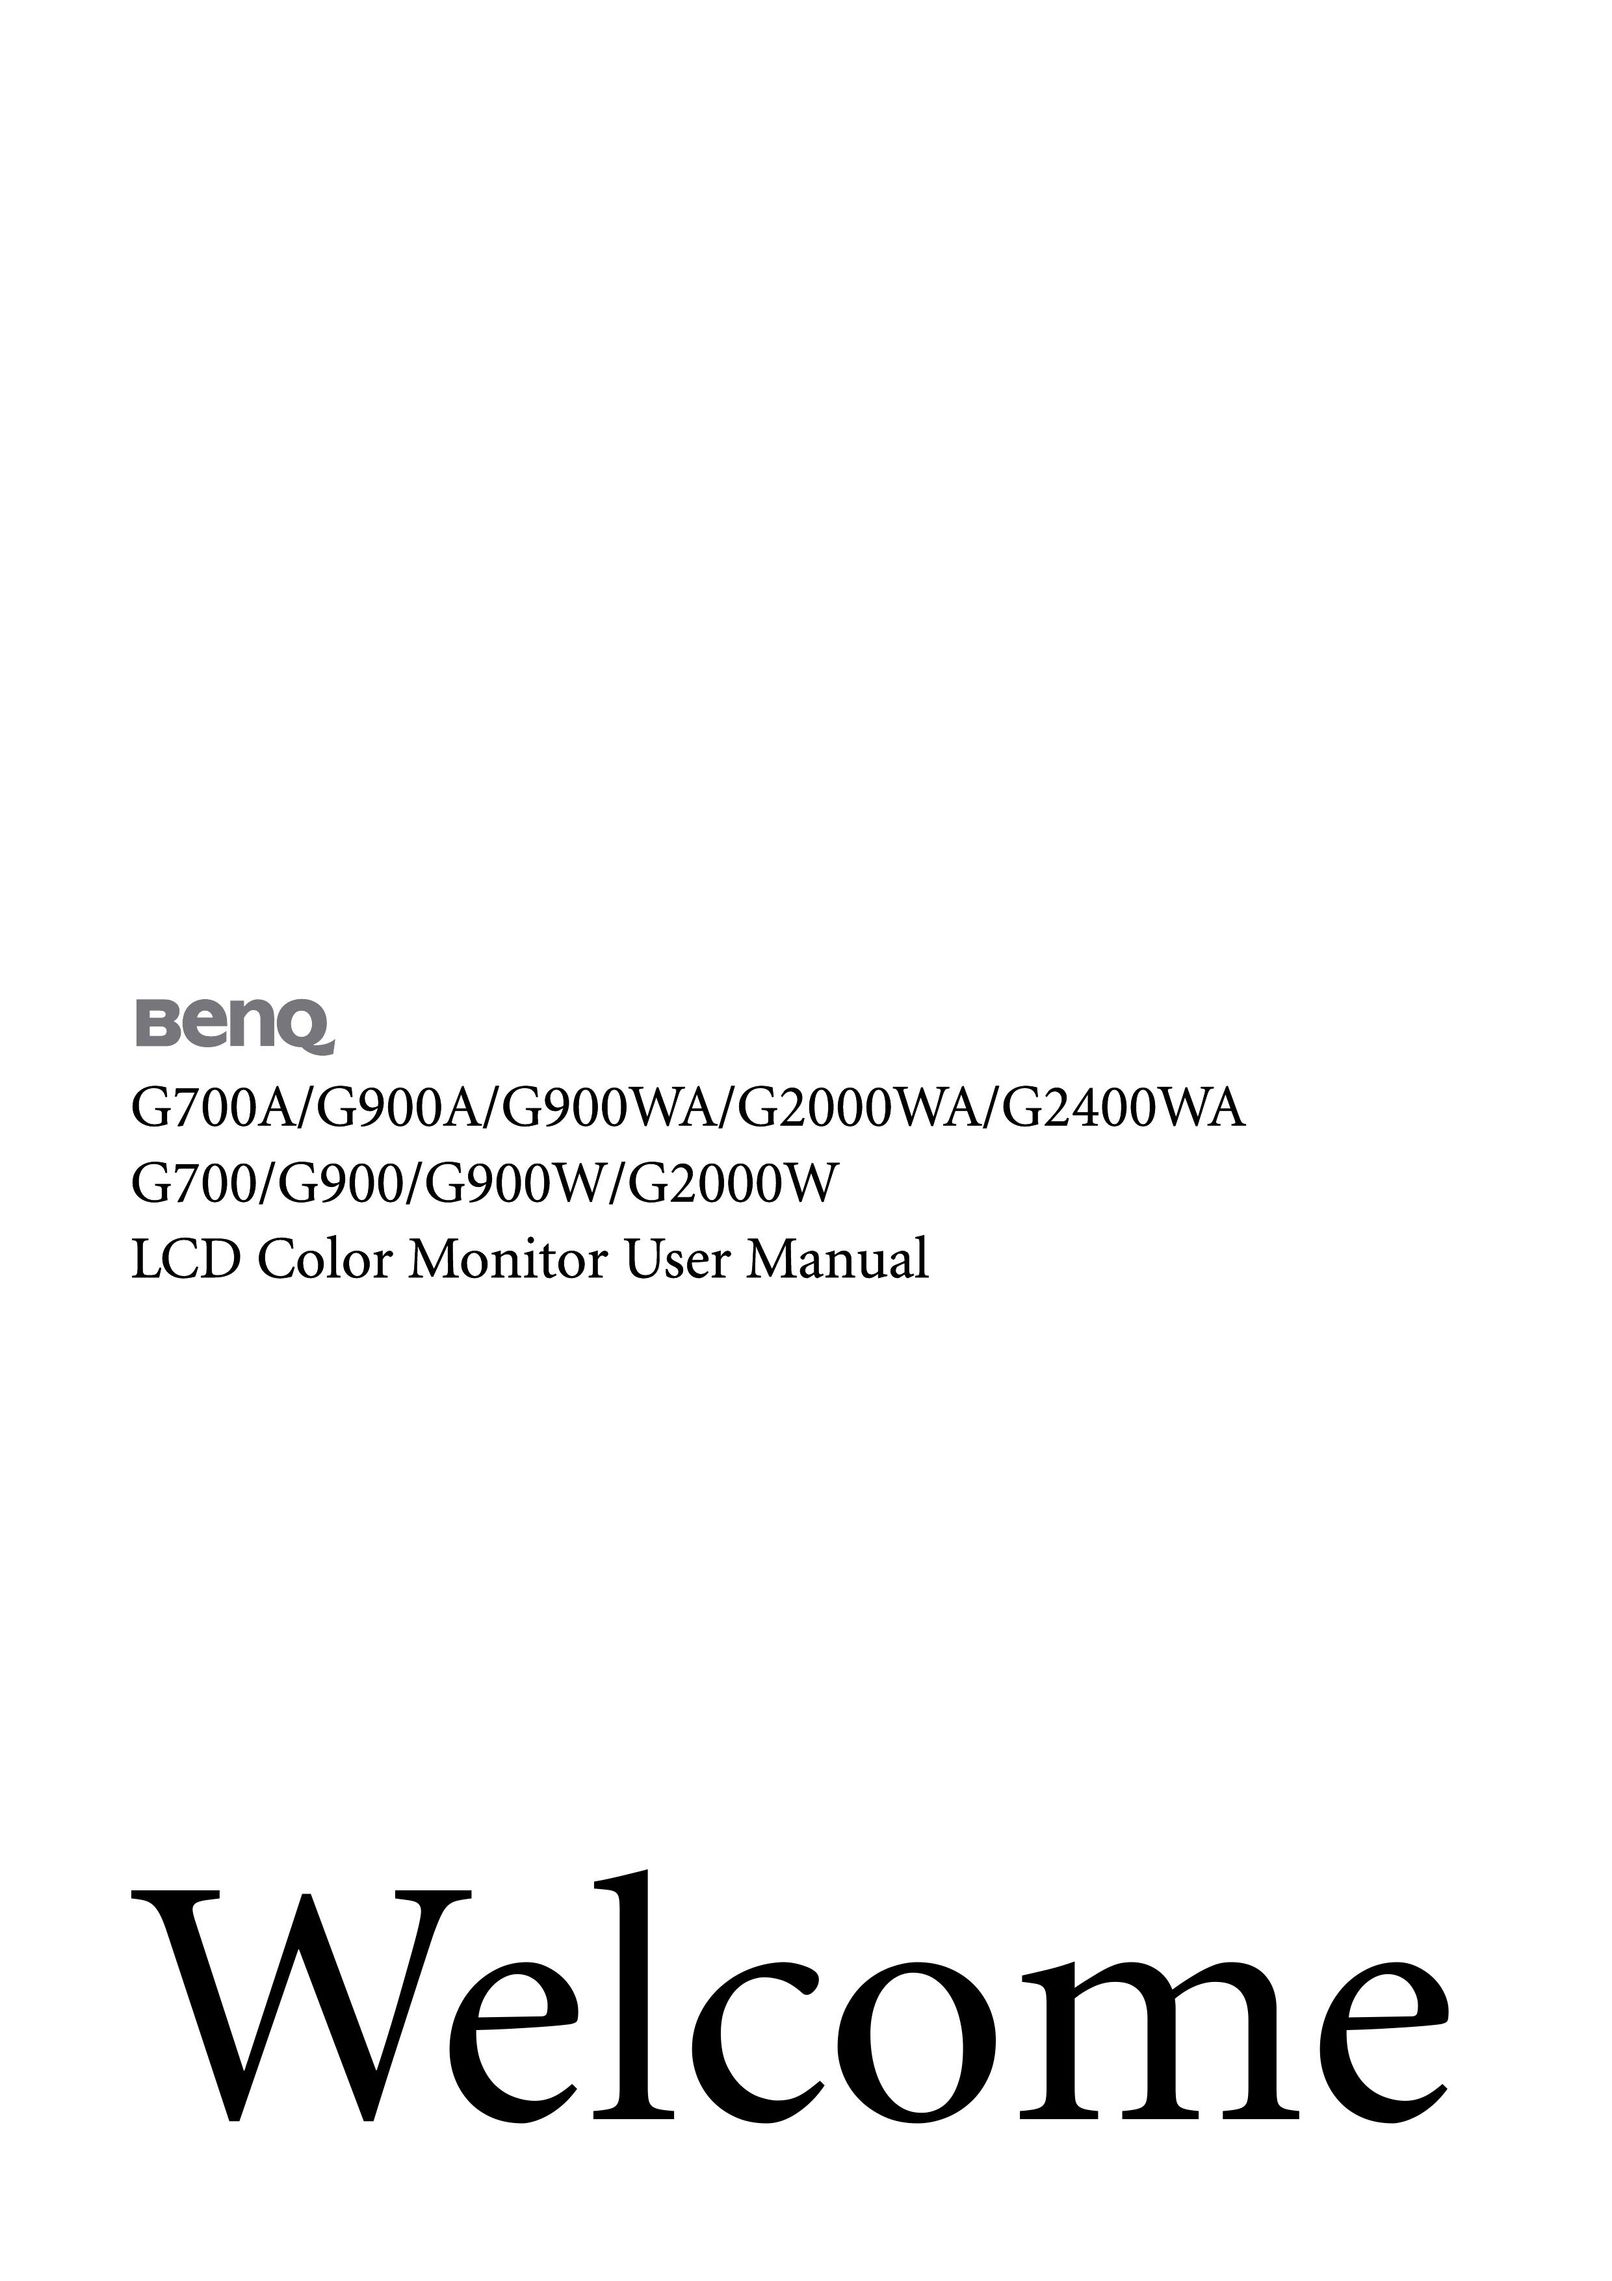 BenQ G2400WA G700 Car Video System User Manual